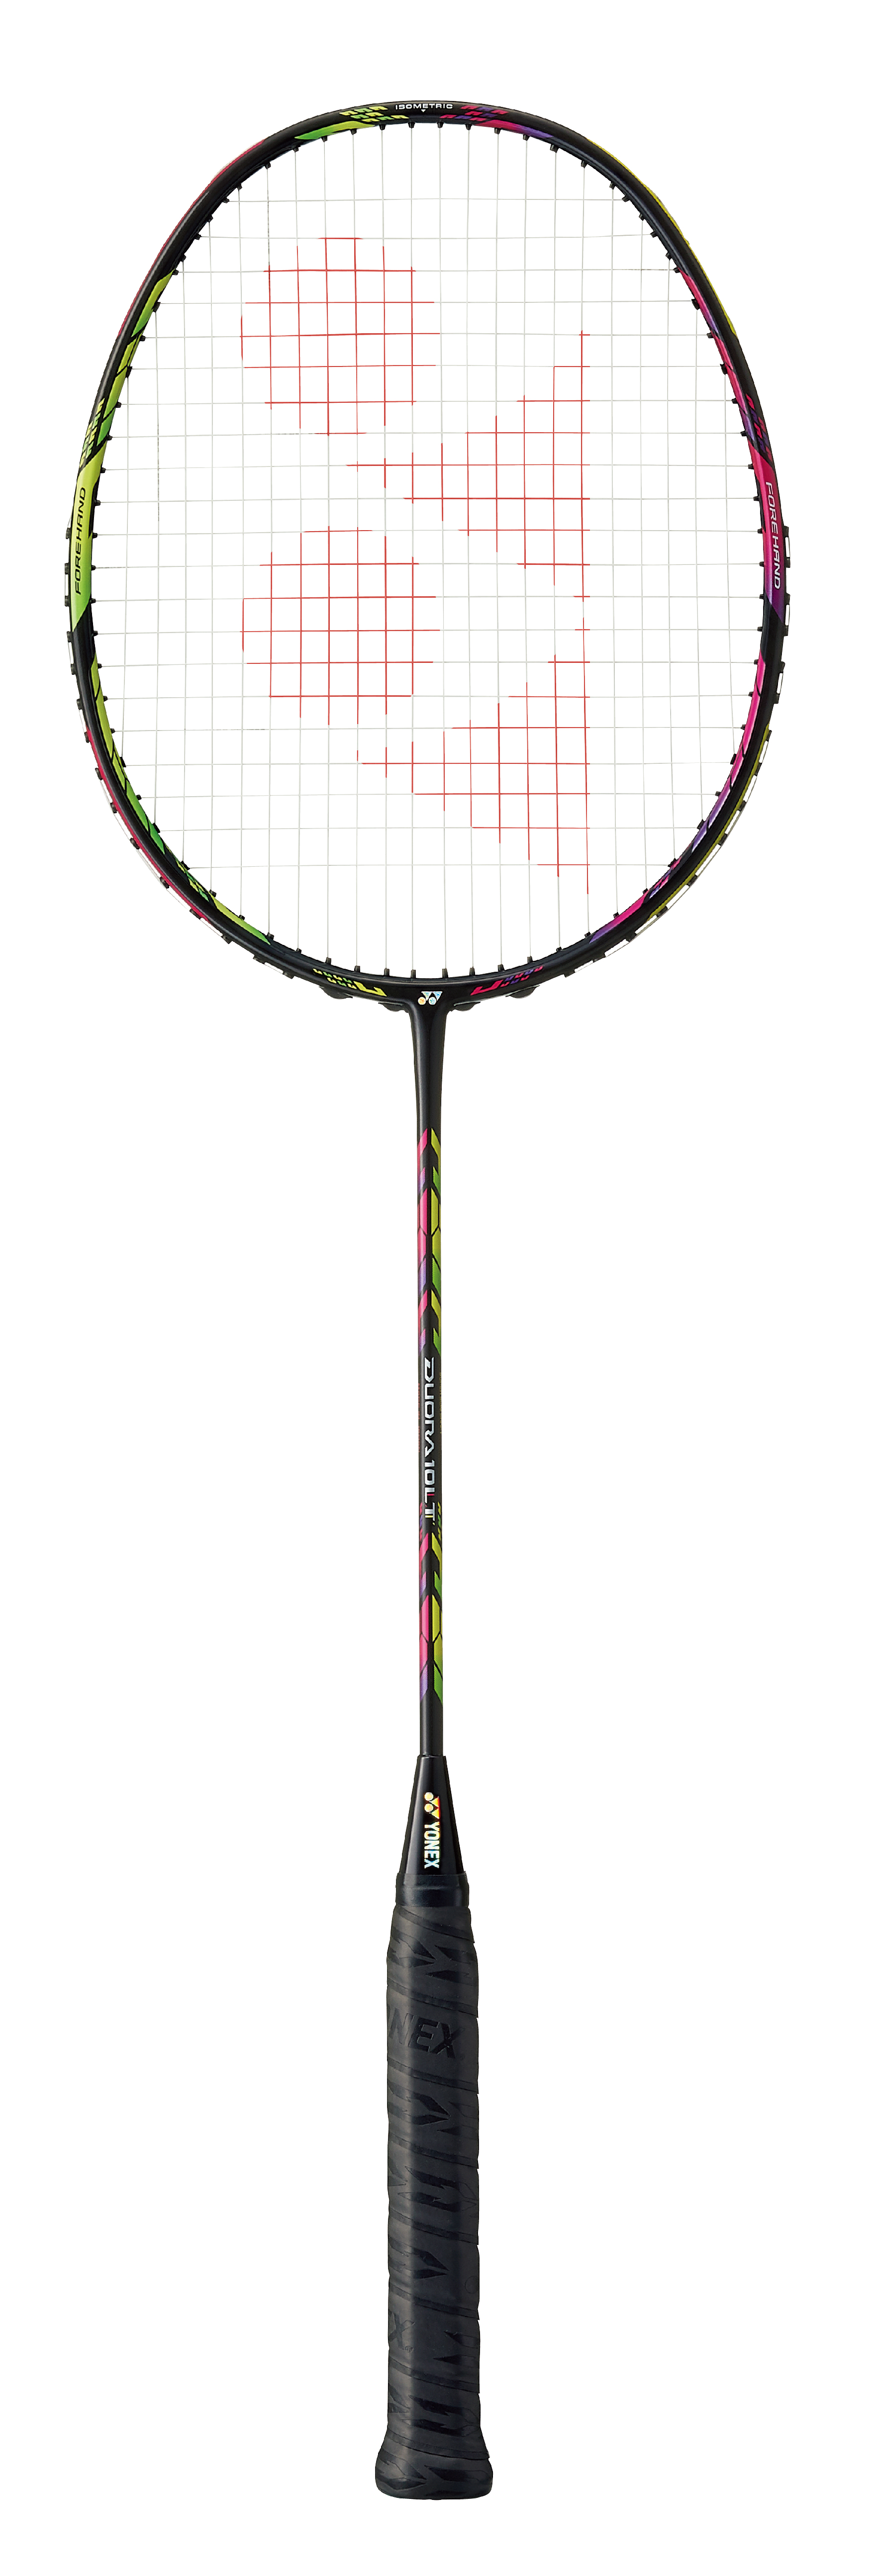 Yonex Badminton Racket Duora 10 LT.jpg